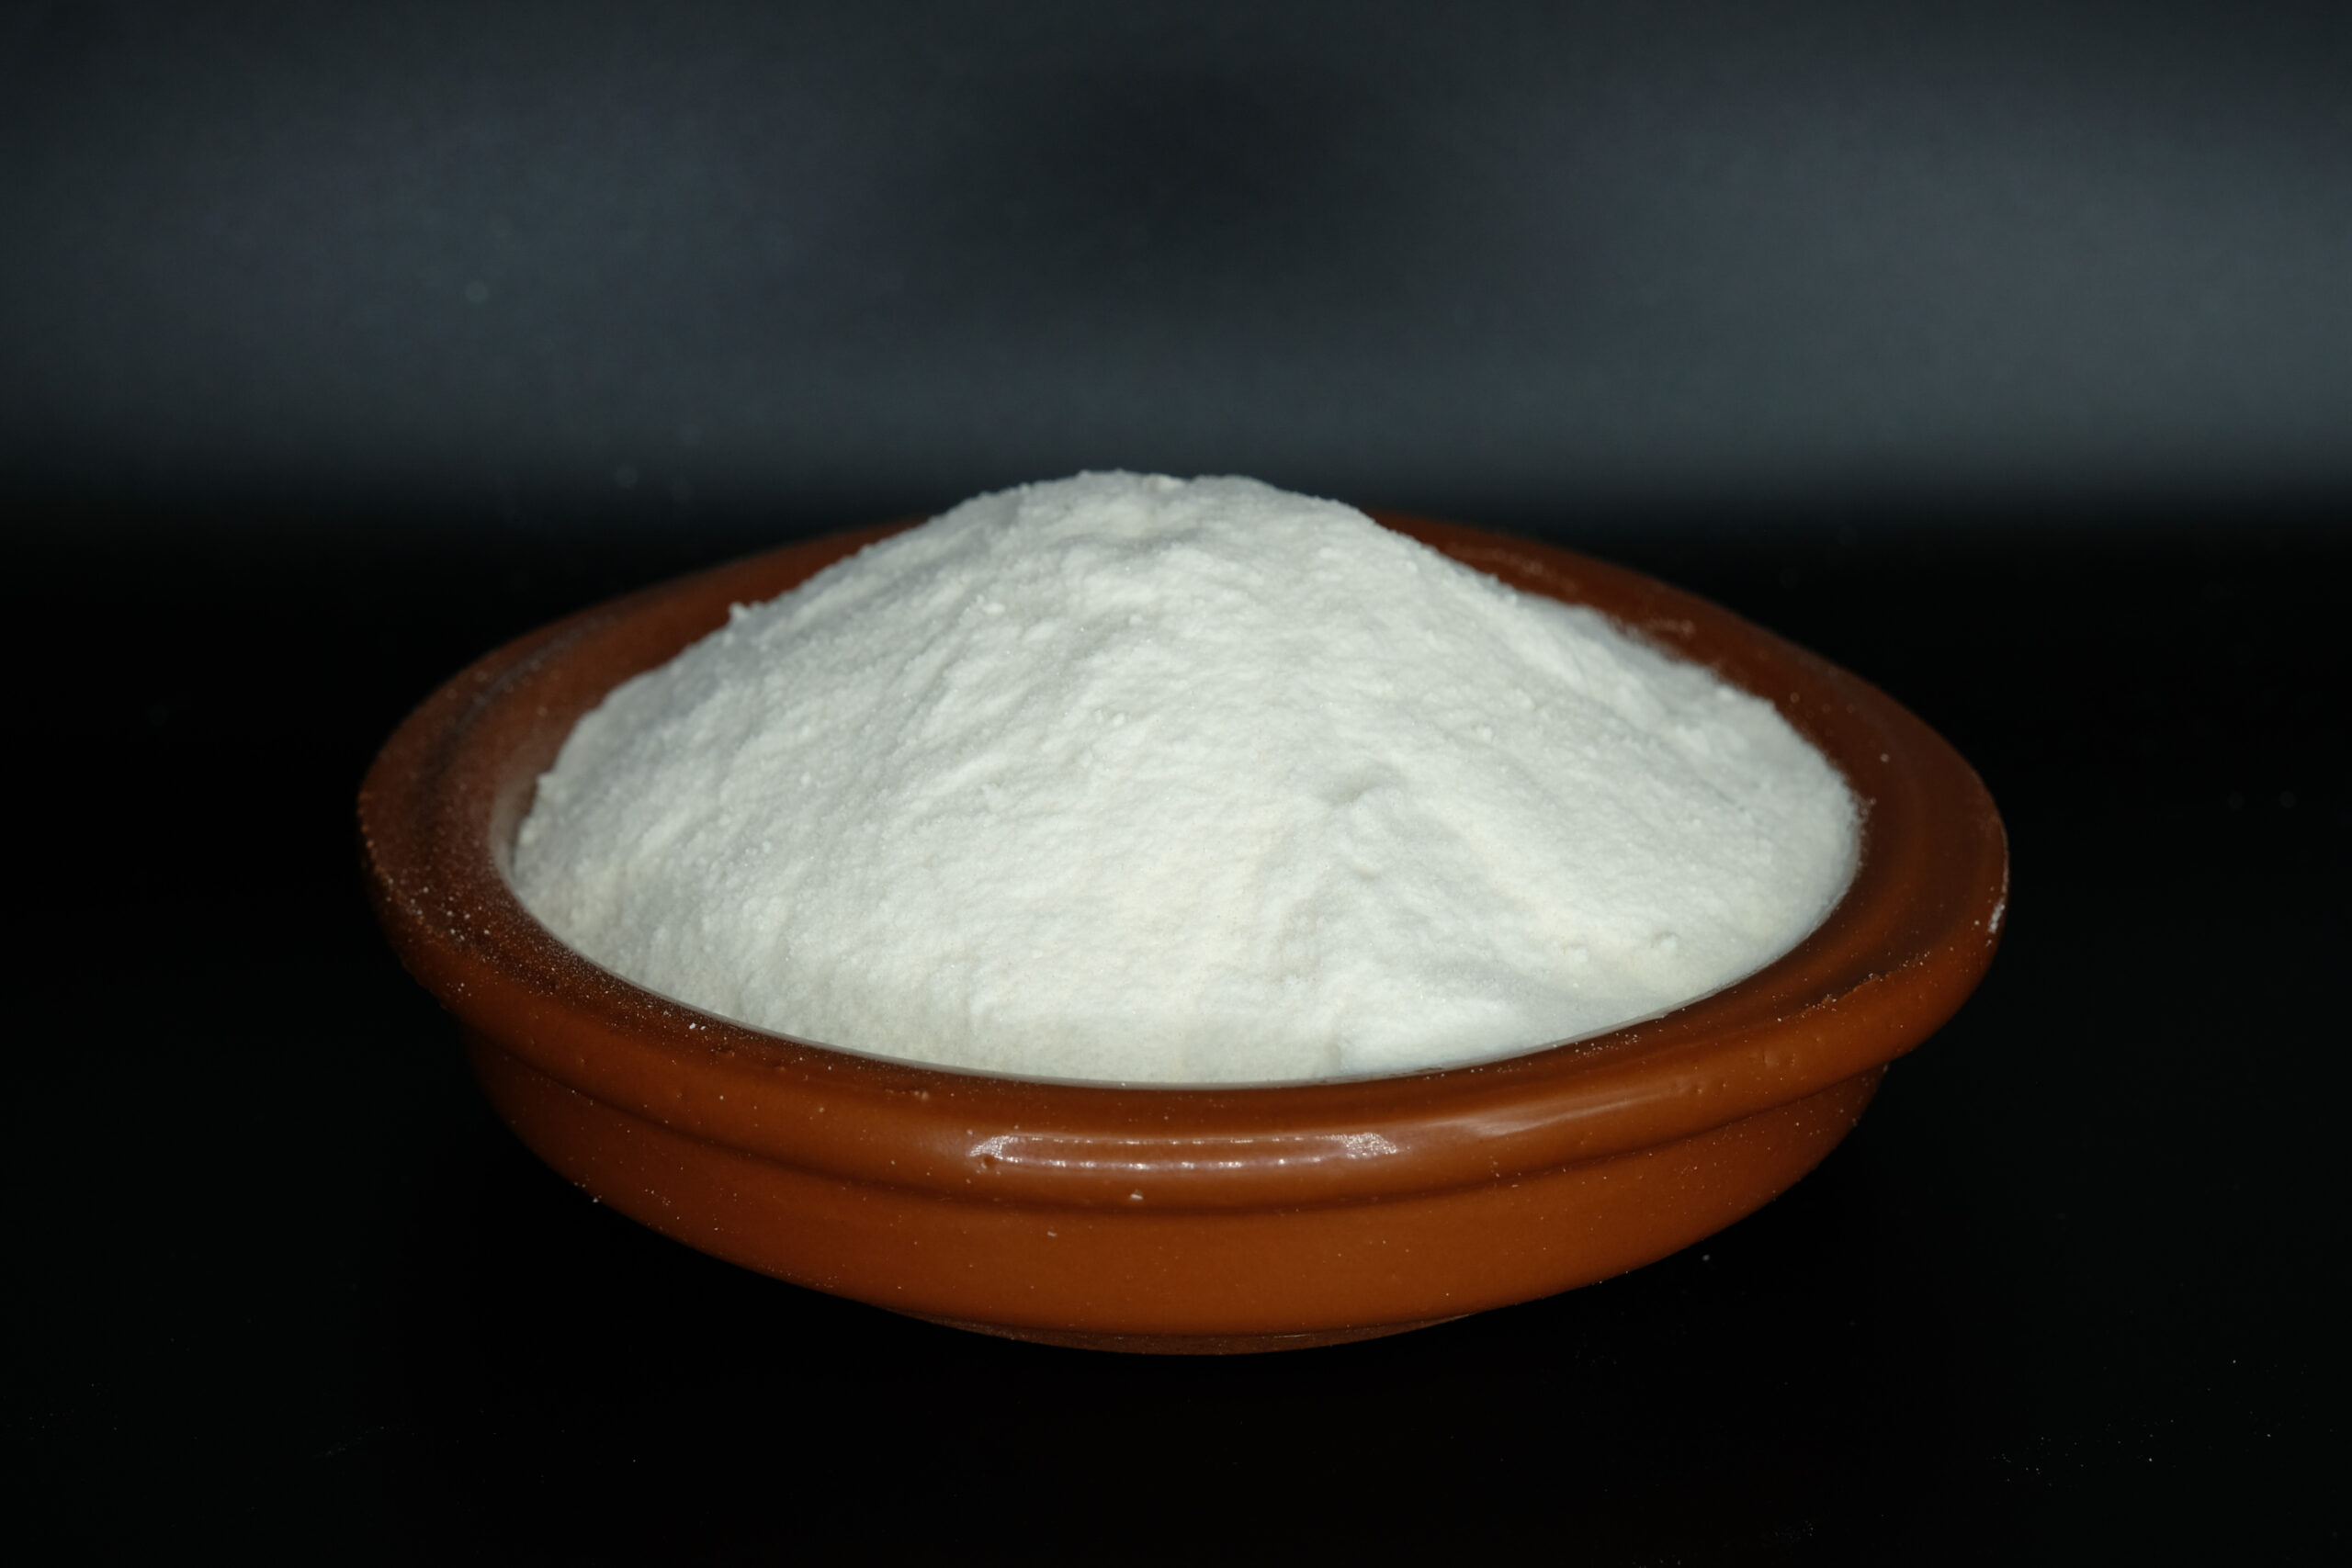 Anderson Advanced Ingredients - LipoSMART Coconut Oil Powder 65% Tapioca Fiber - AG3970